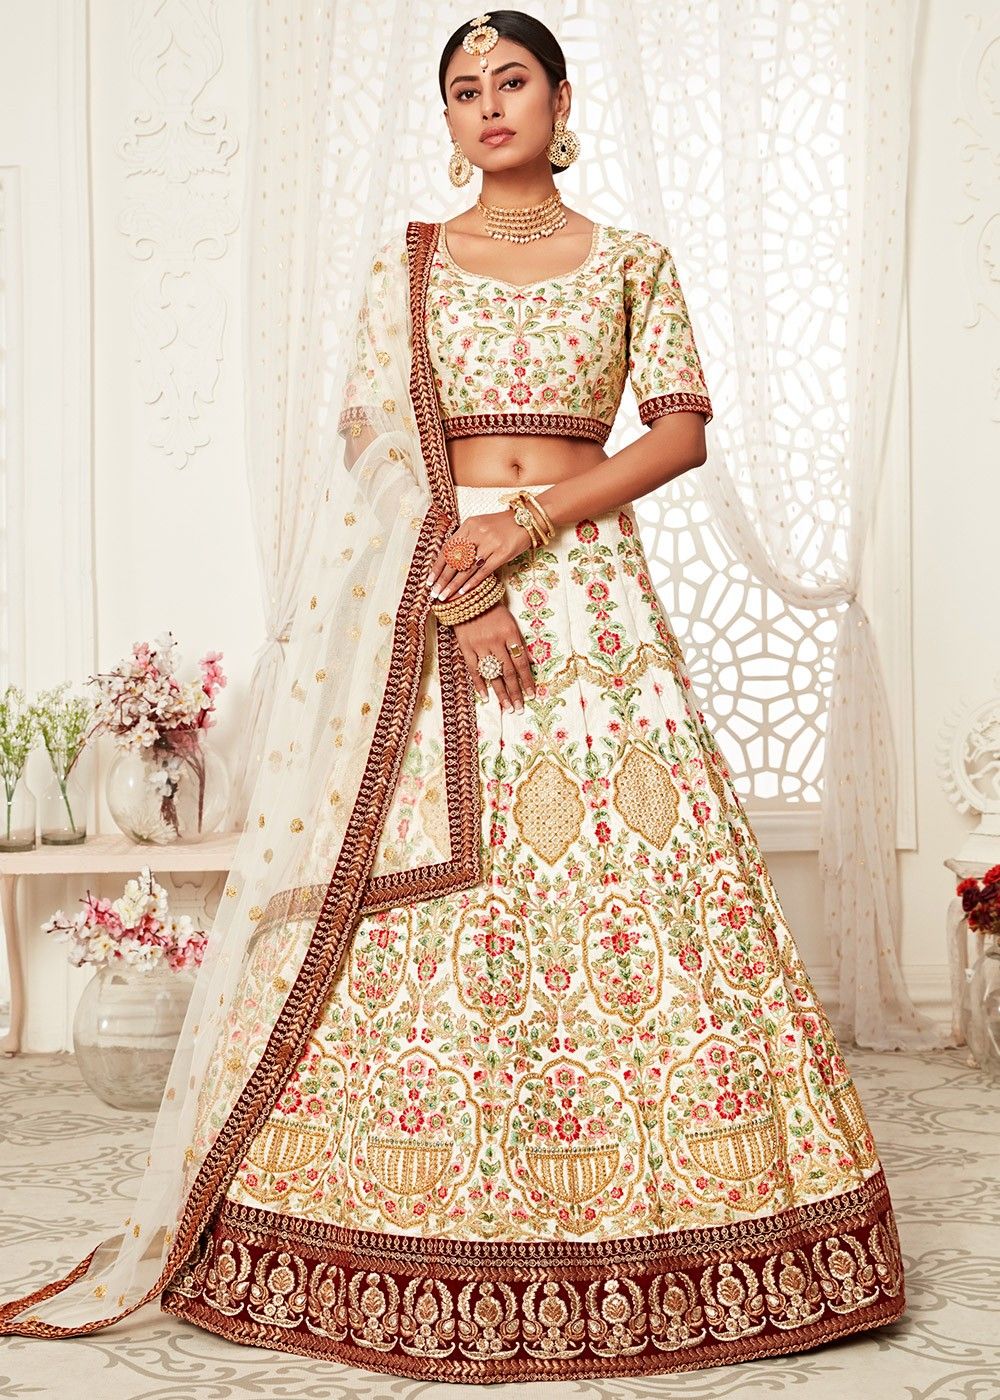 Off white and golden Brocade Lehenga | Wedding lehenga designs, Indian  wedding outfits, Stylish party dresses